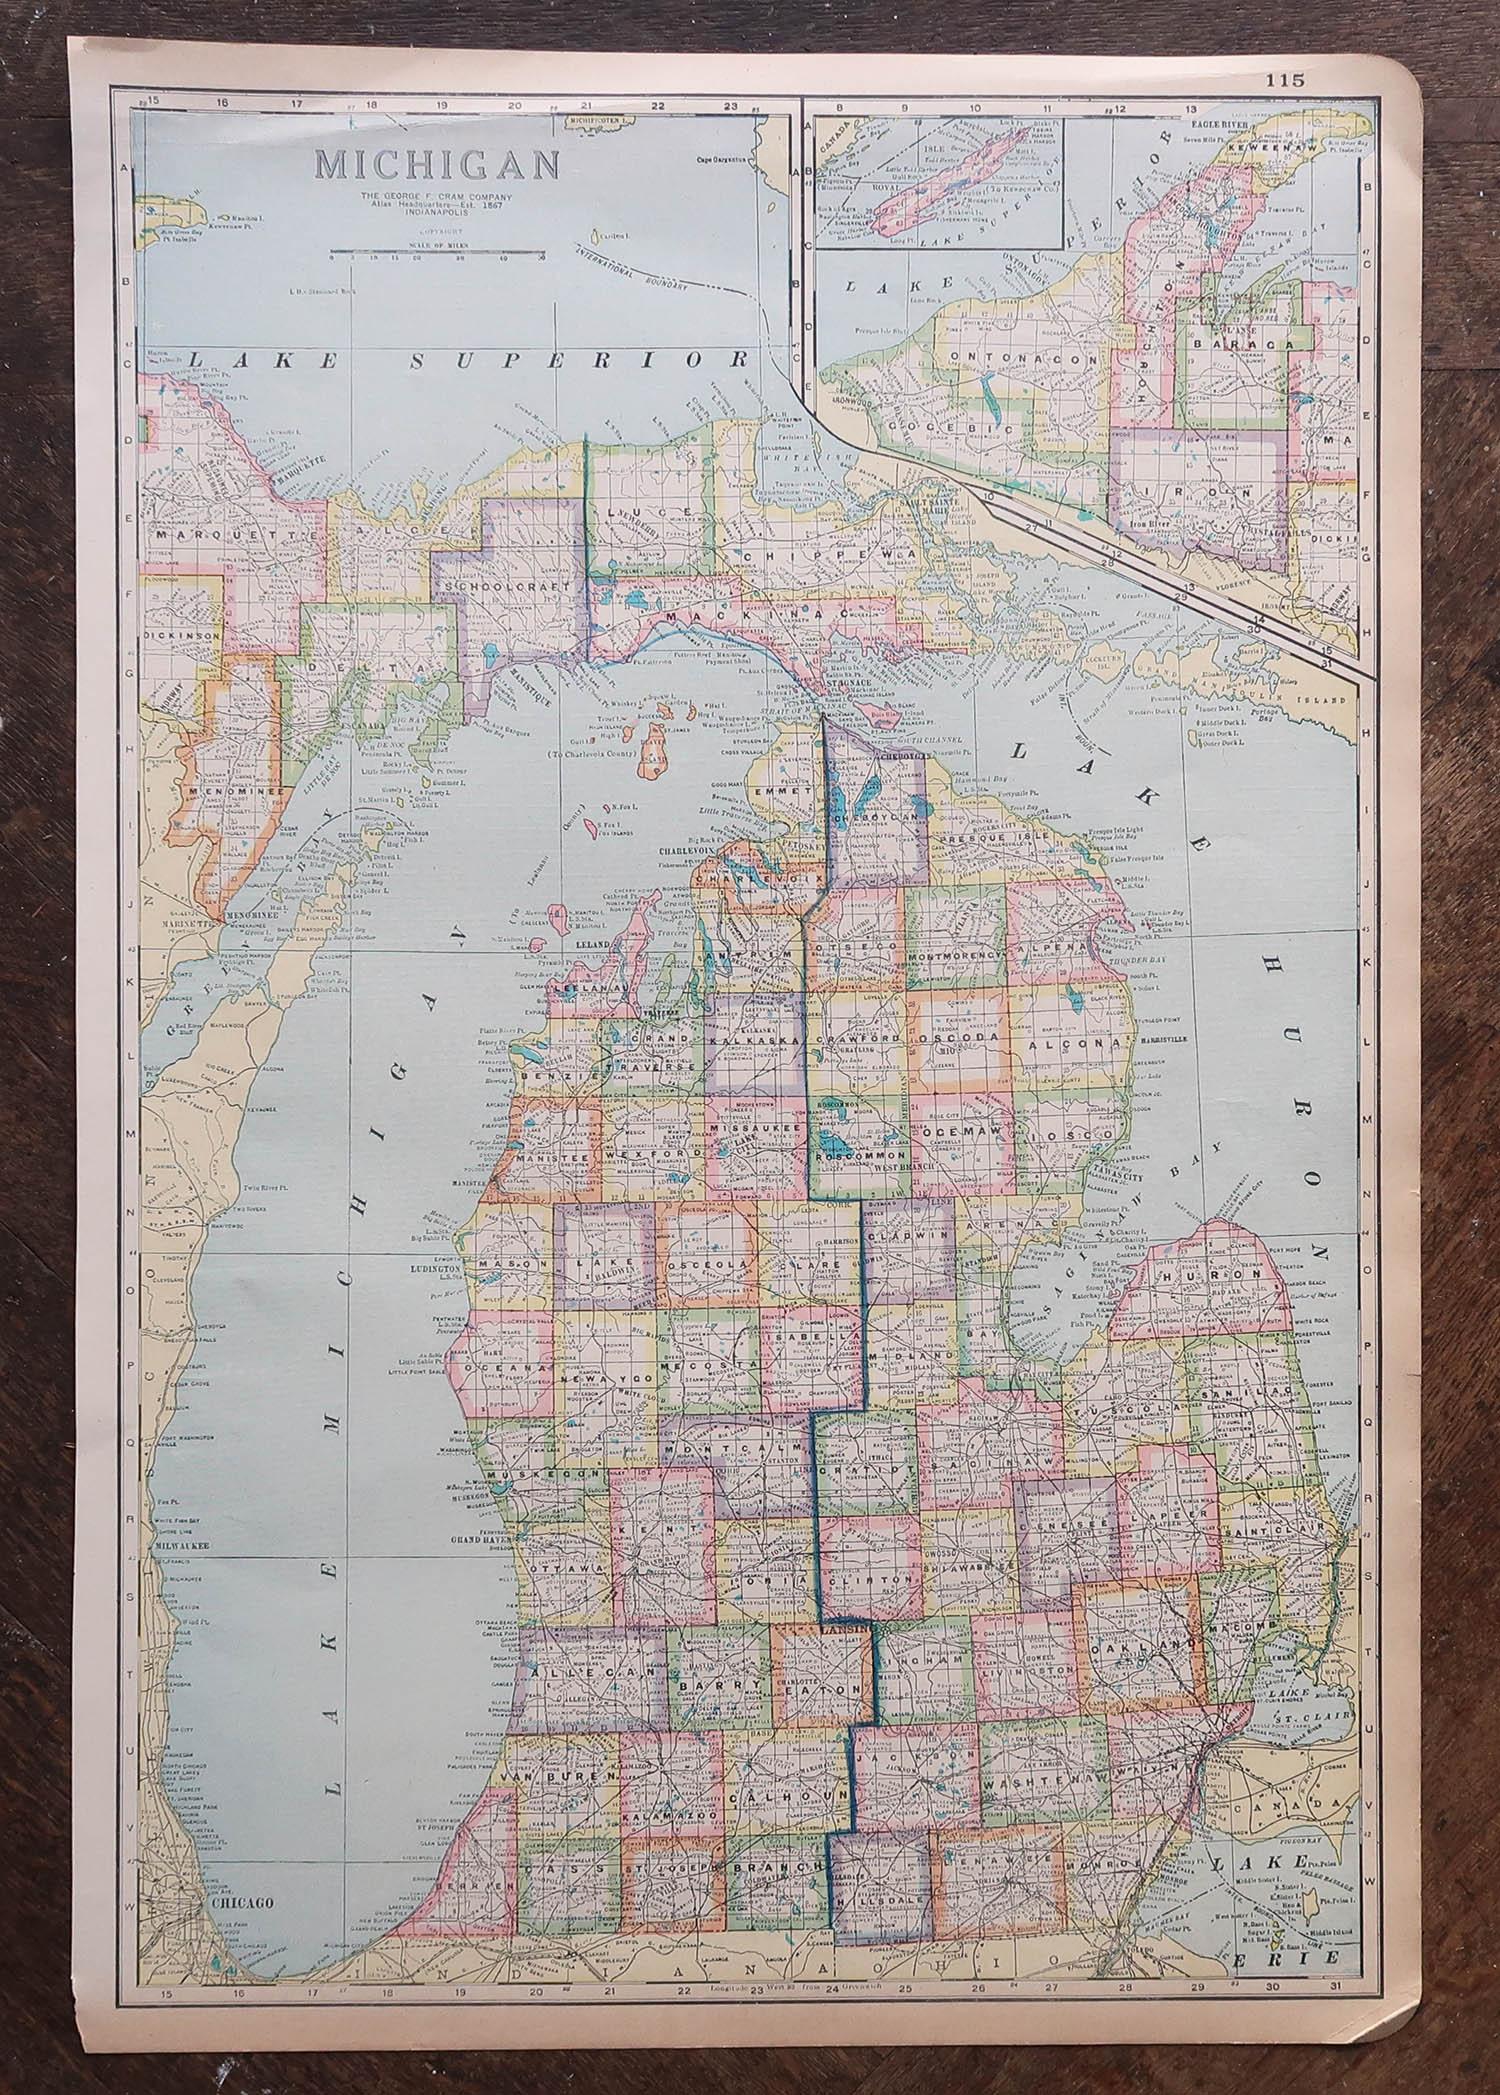 Other Large Original Antique Map of Michigan, USA, circa 1900